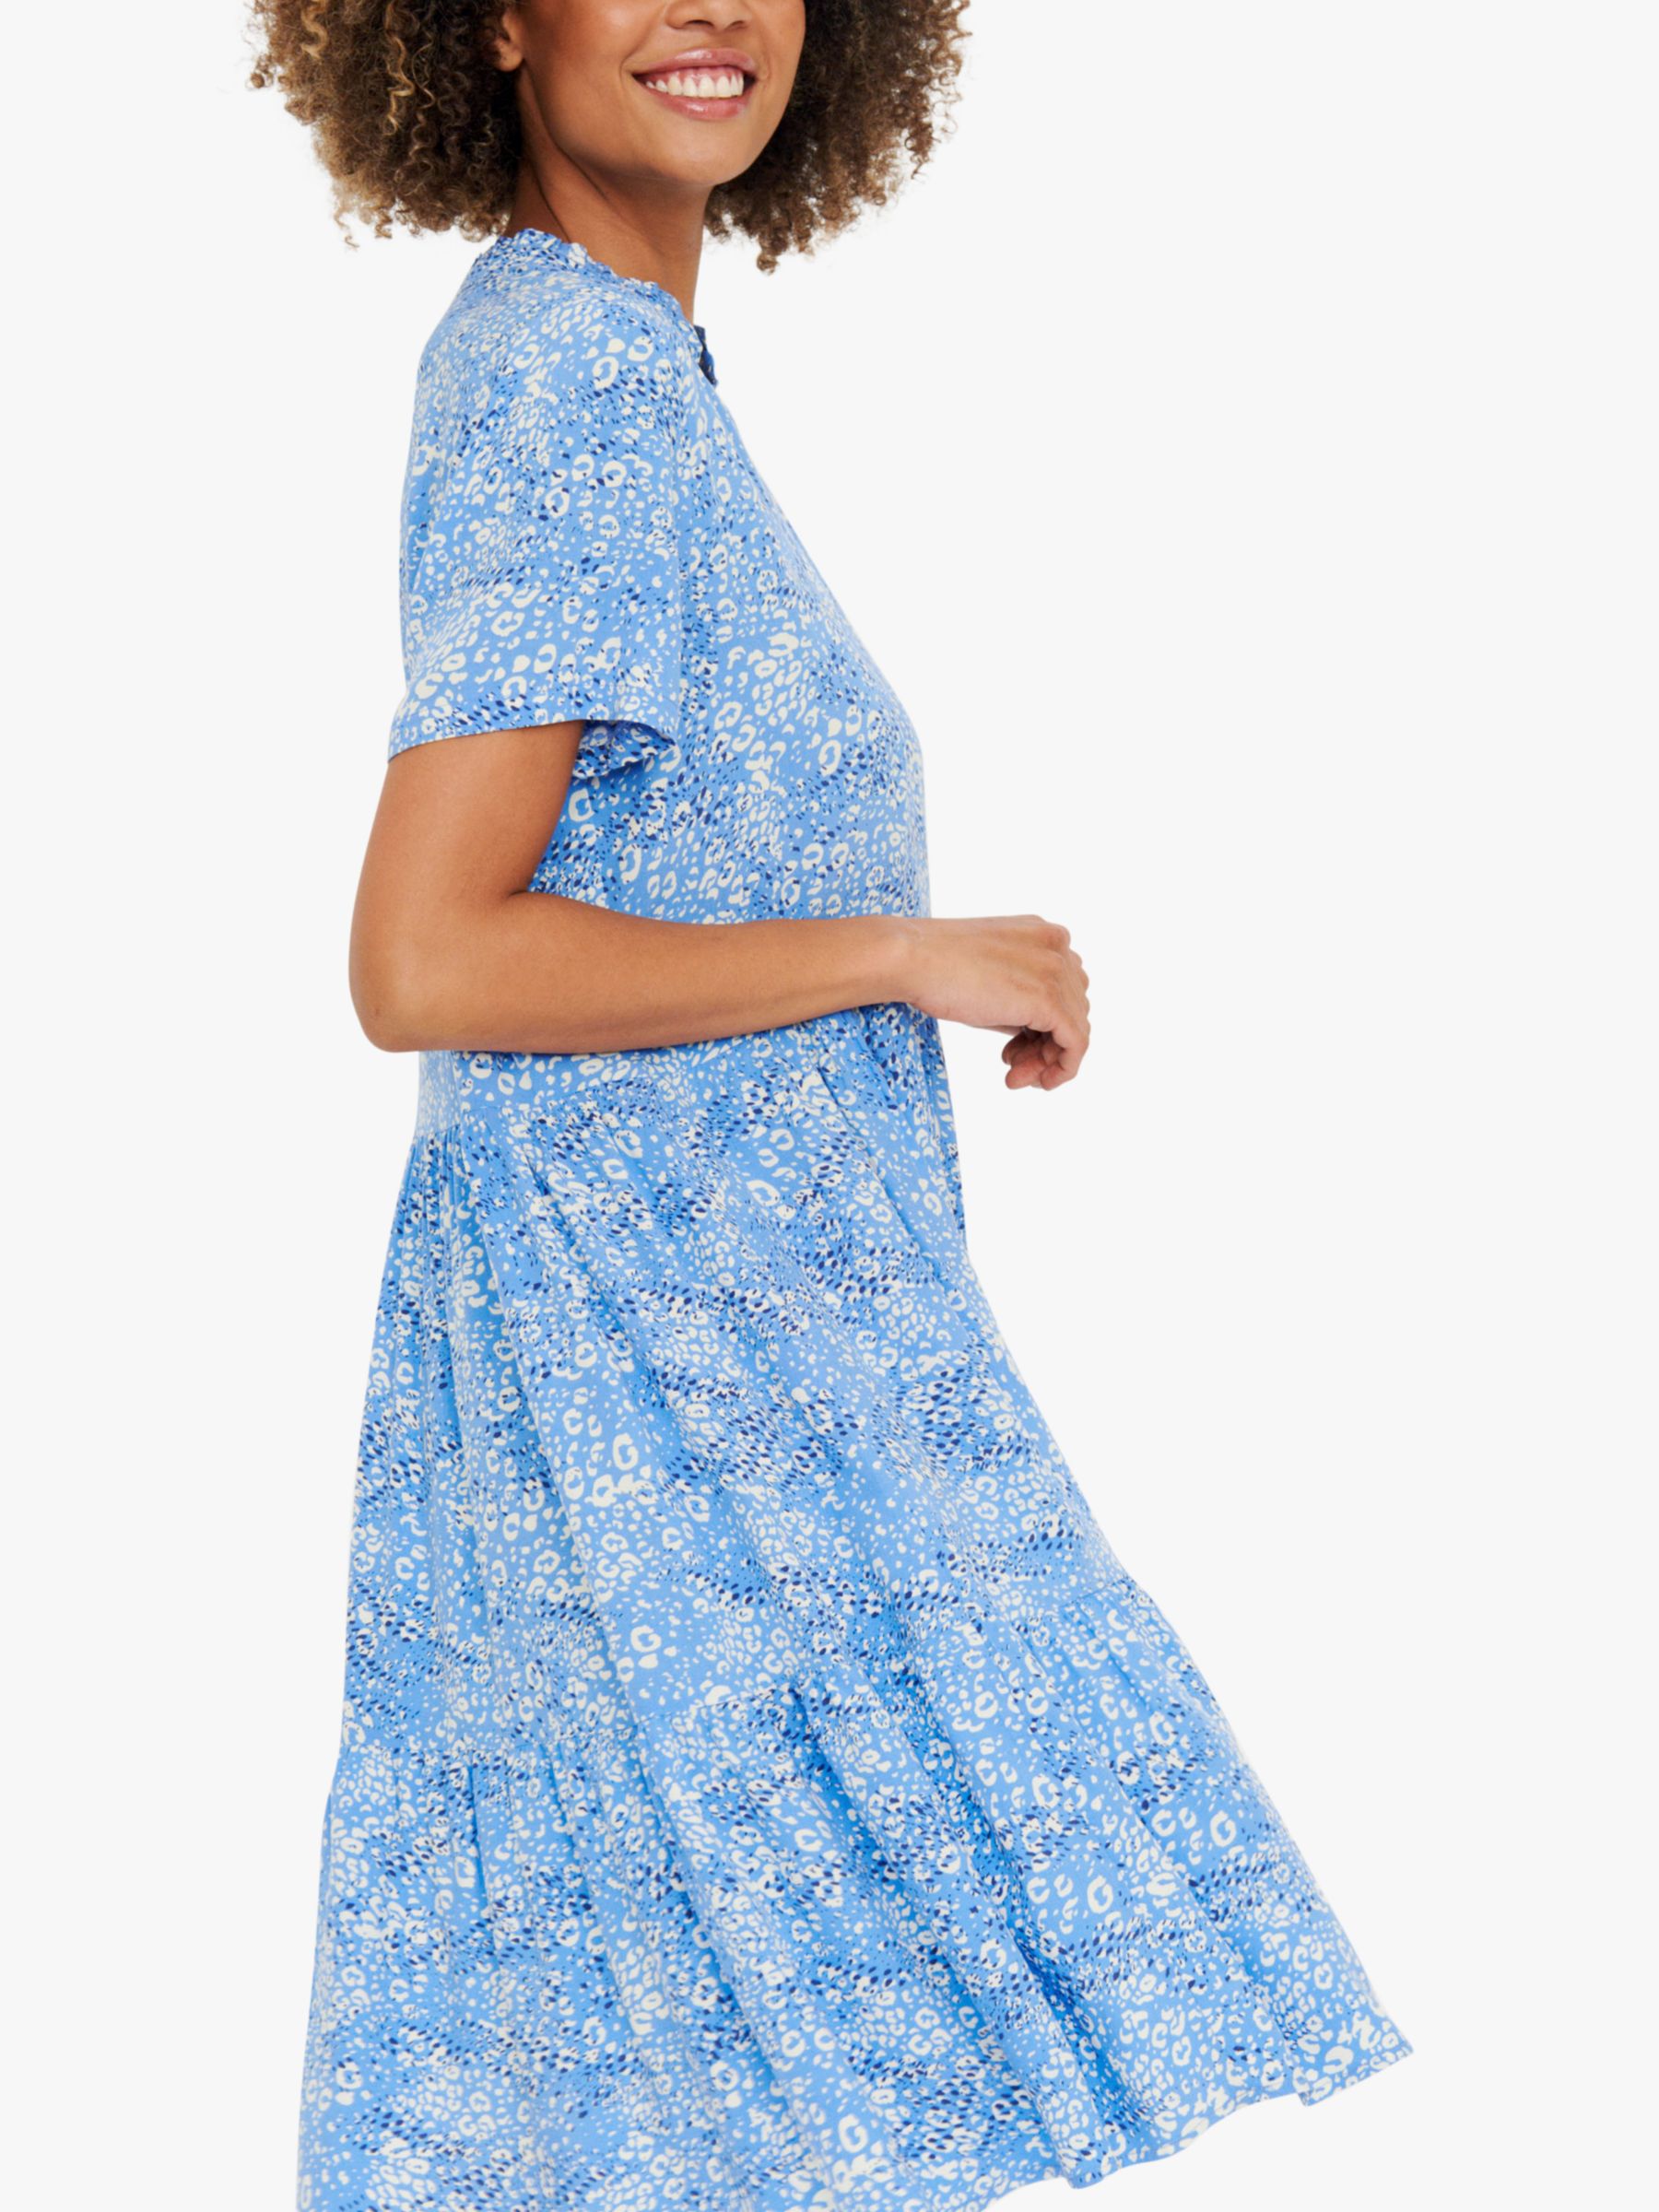 Saint Tropez Eda Leopard Print Tiered Dress, Ultramarine, S